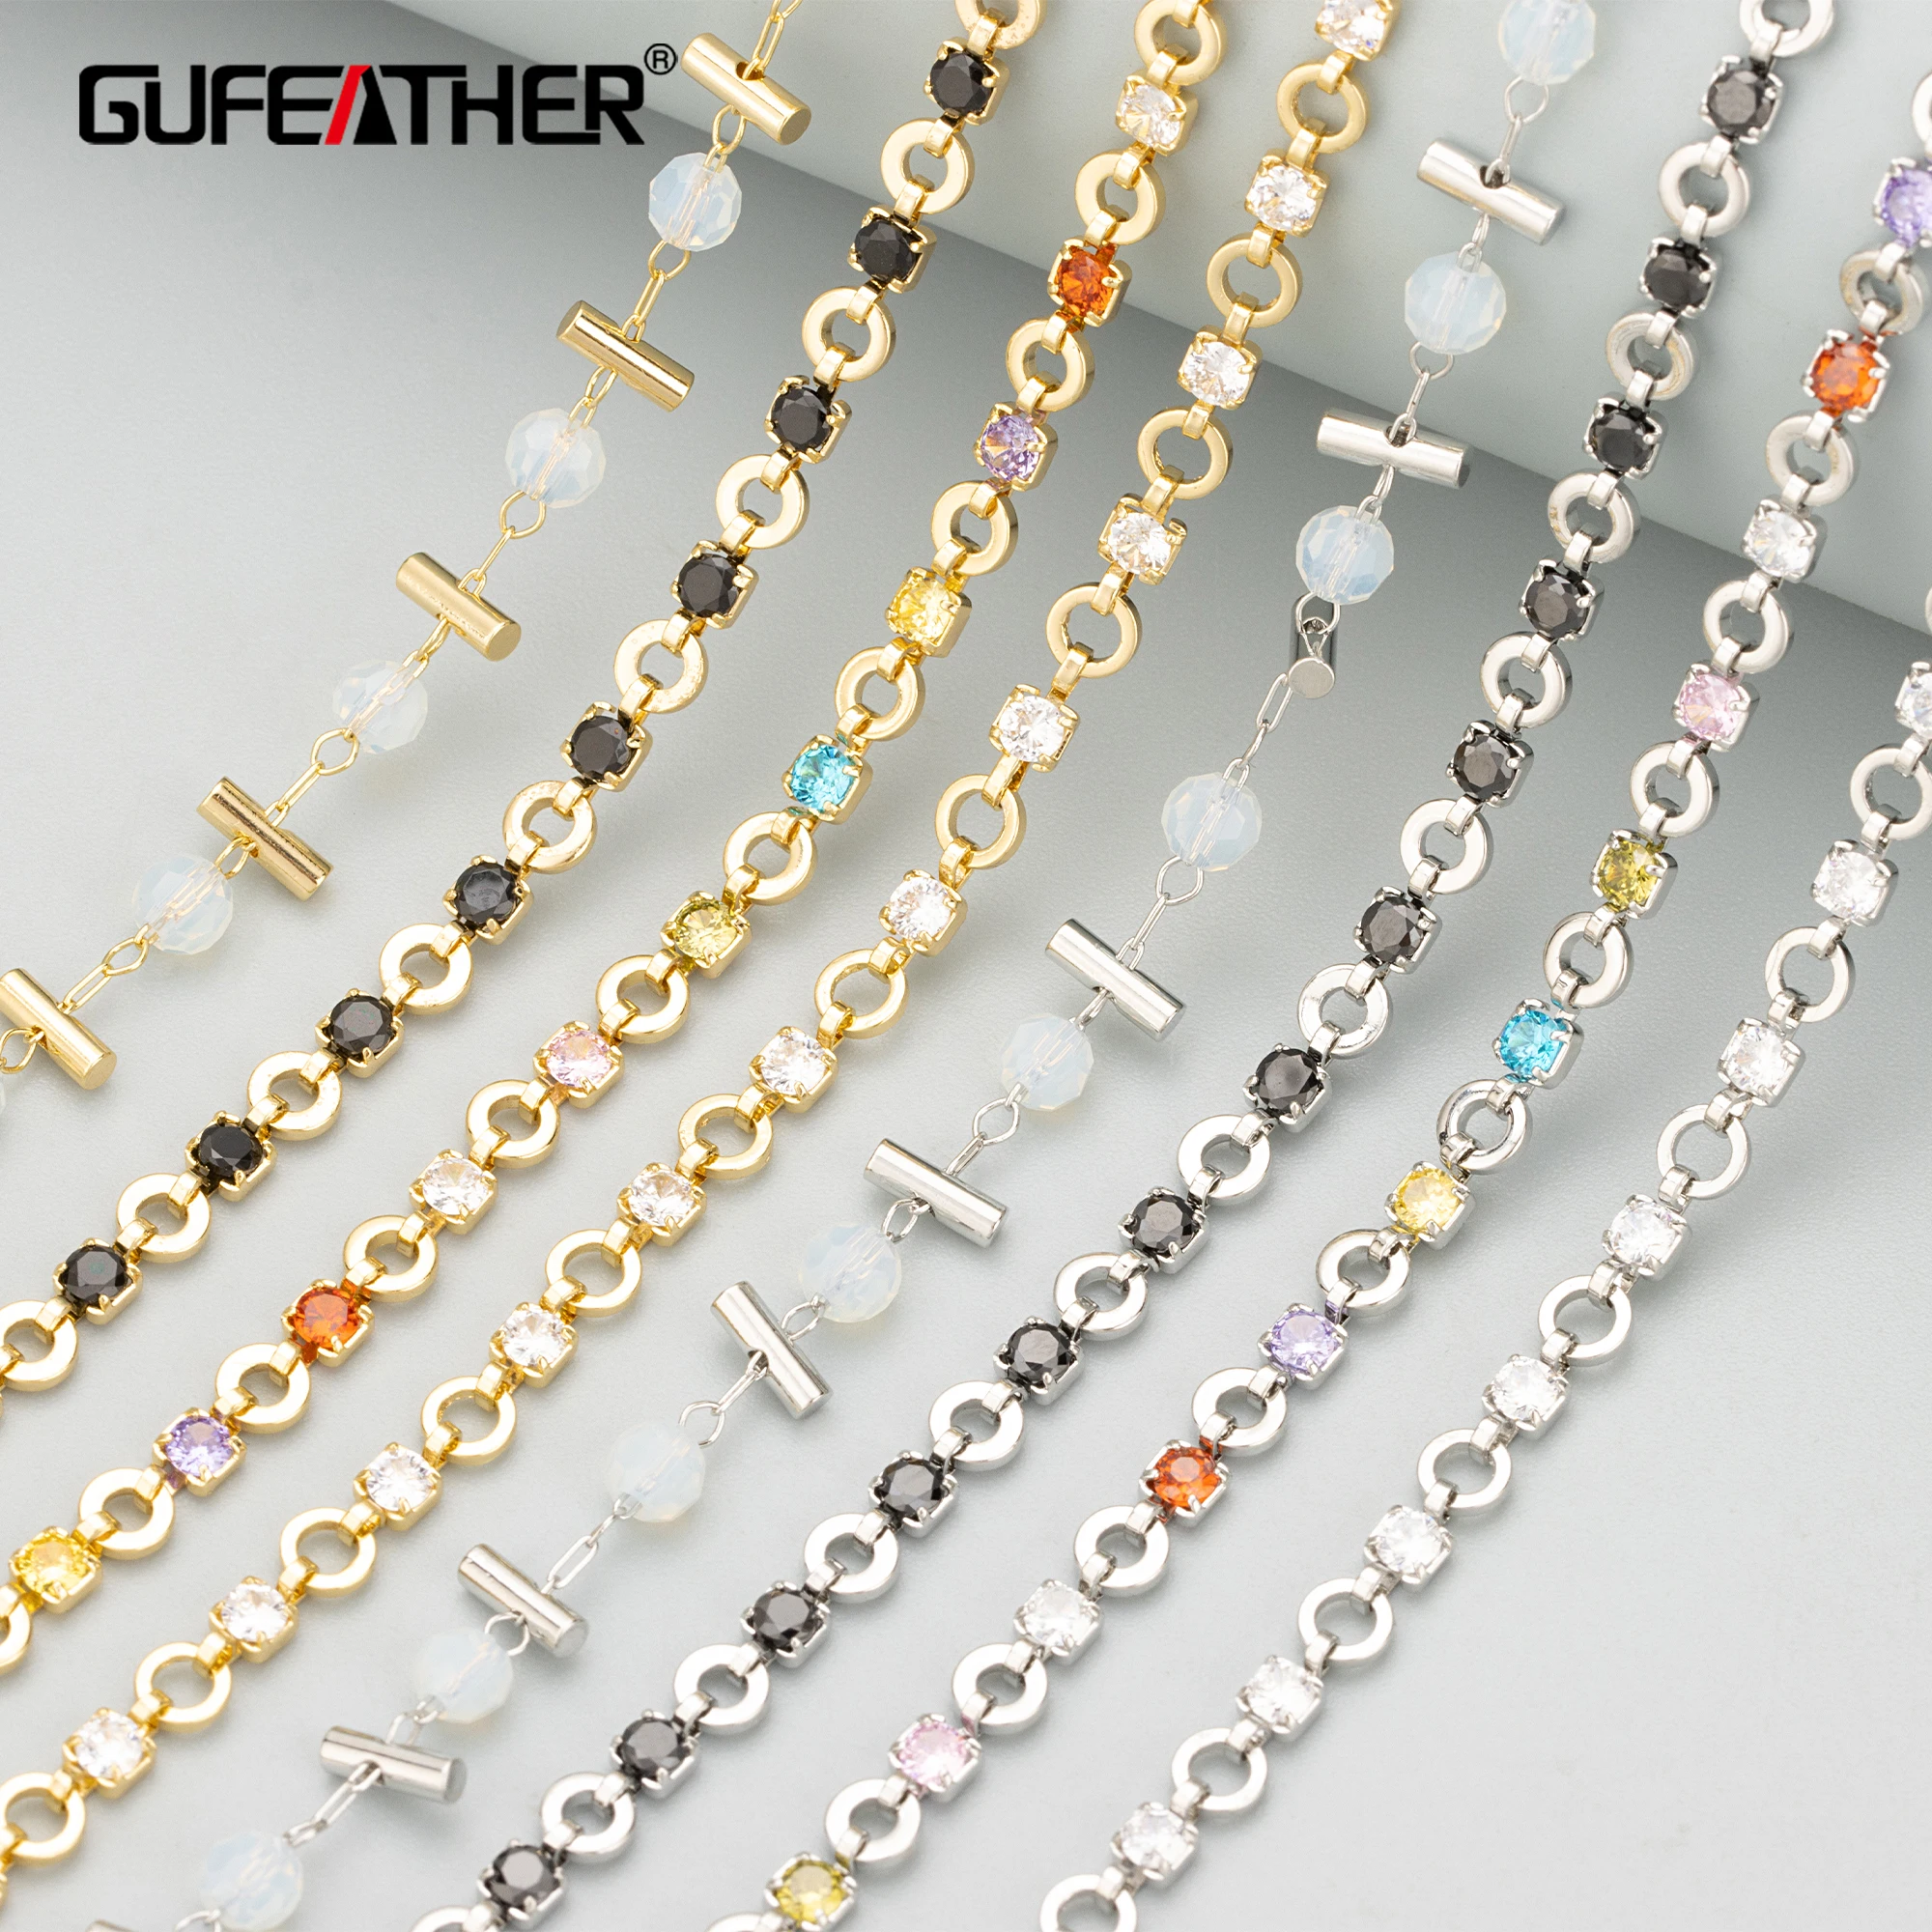 

C356 chain18k gold rhodium platedcopperzirconsnickel freehand madejewelry makingdiy bracelet necklace accessories1m/lot